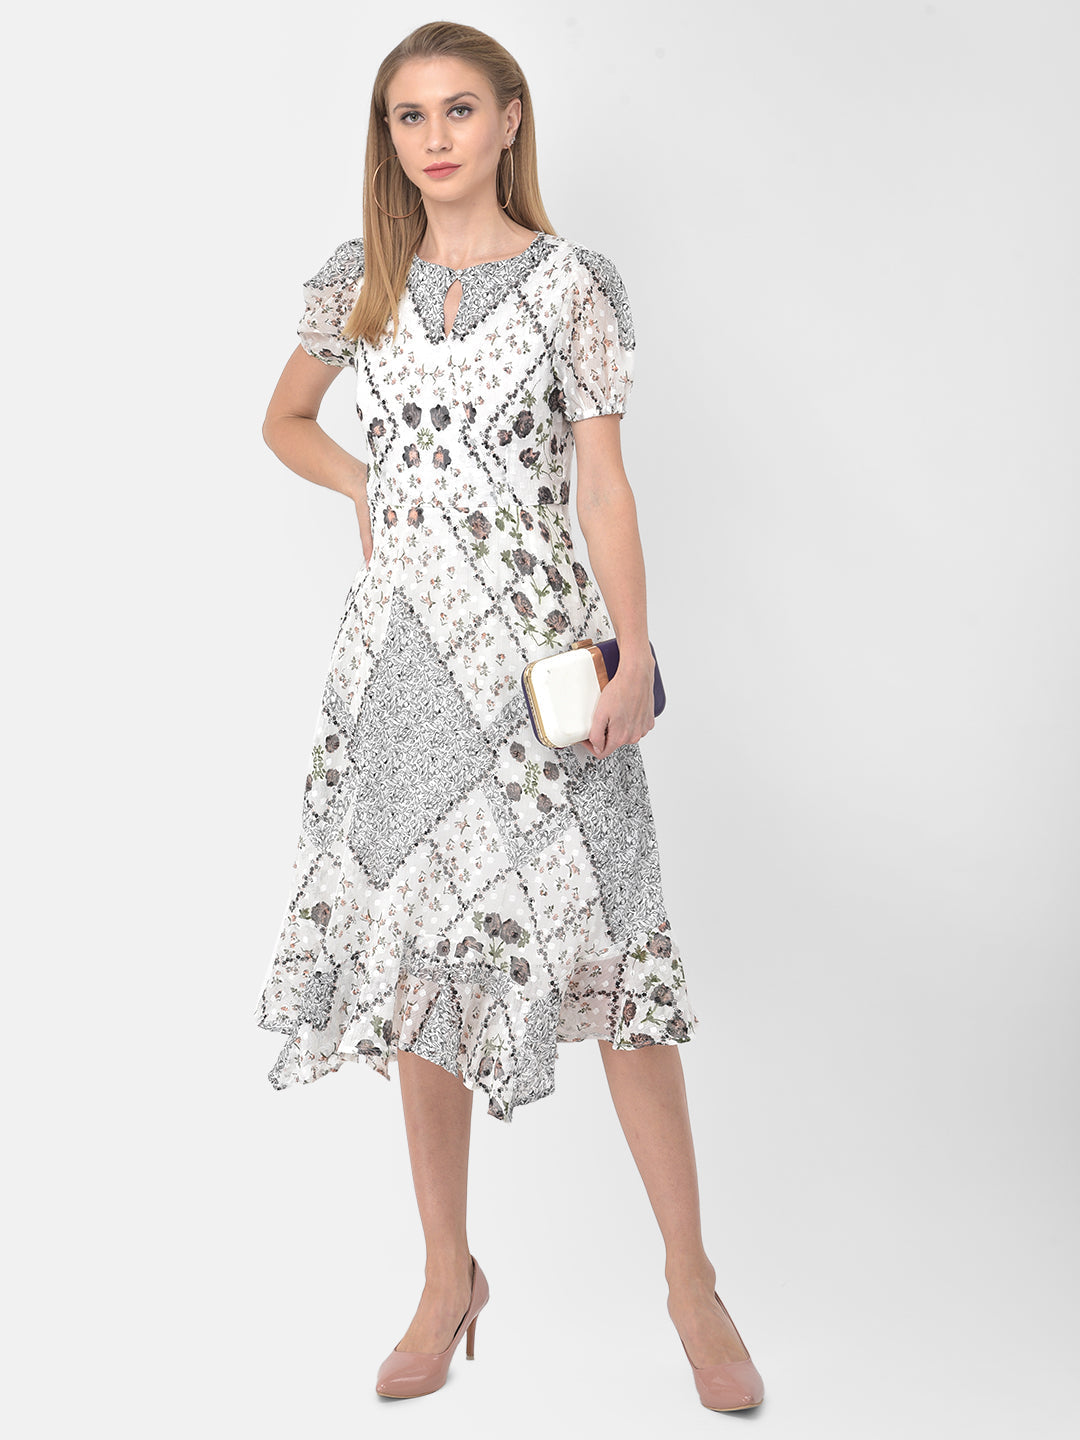 Ivory Half Sleeve A-Line Dress With Ruffles